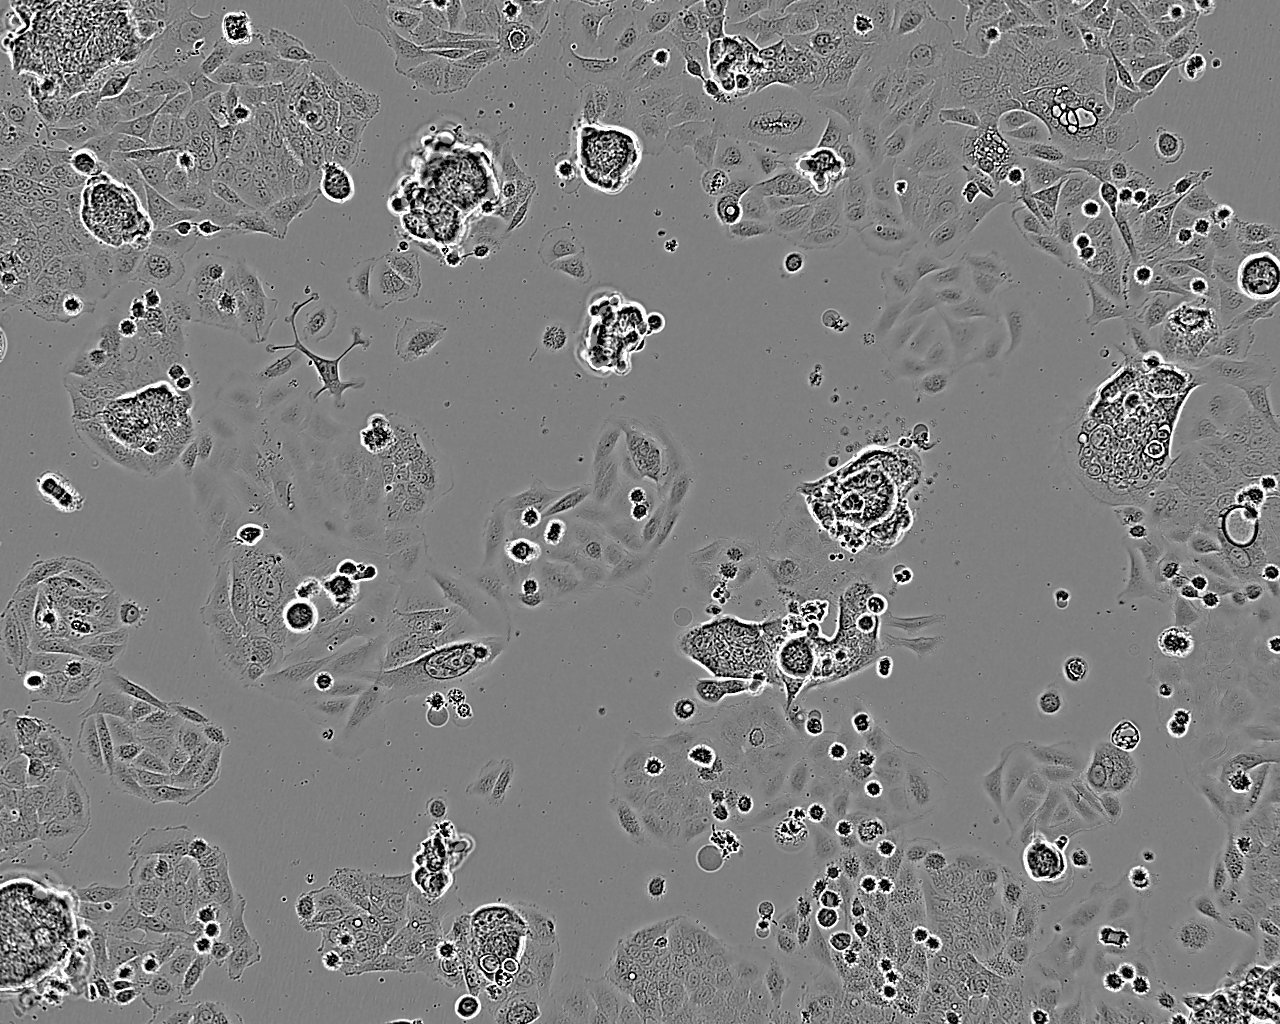 Caov-4 Epithelial Cell|人卵巢癌传代细胞(有STR鉴定)